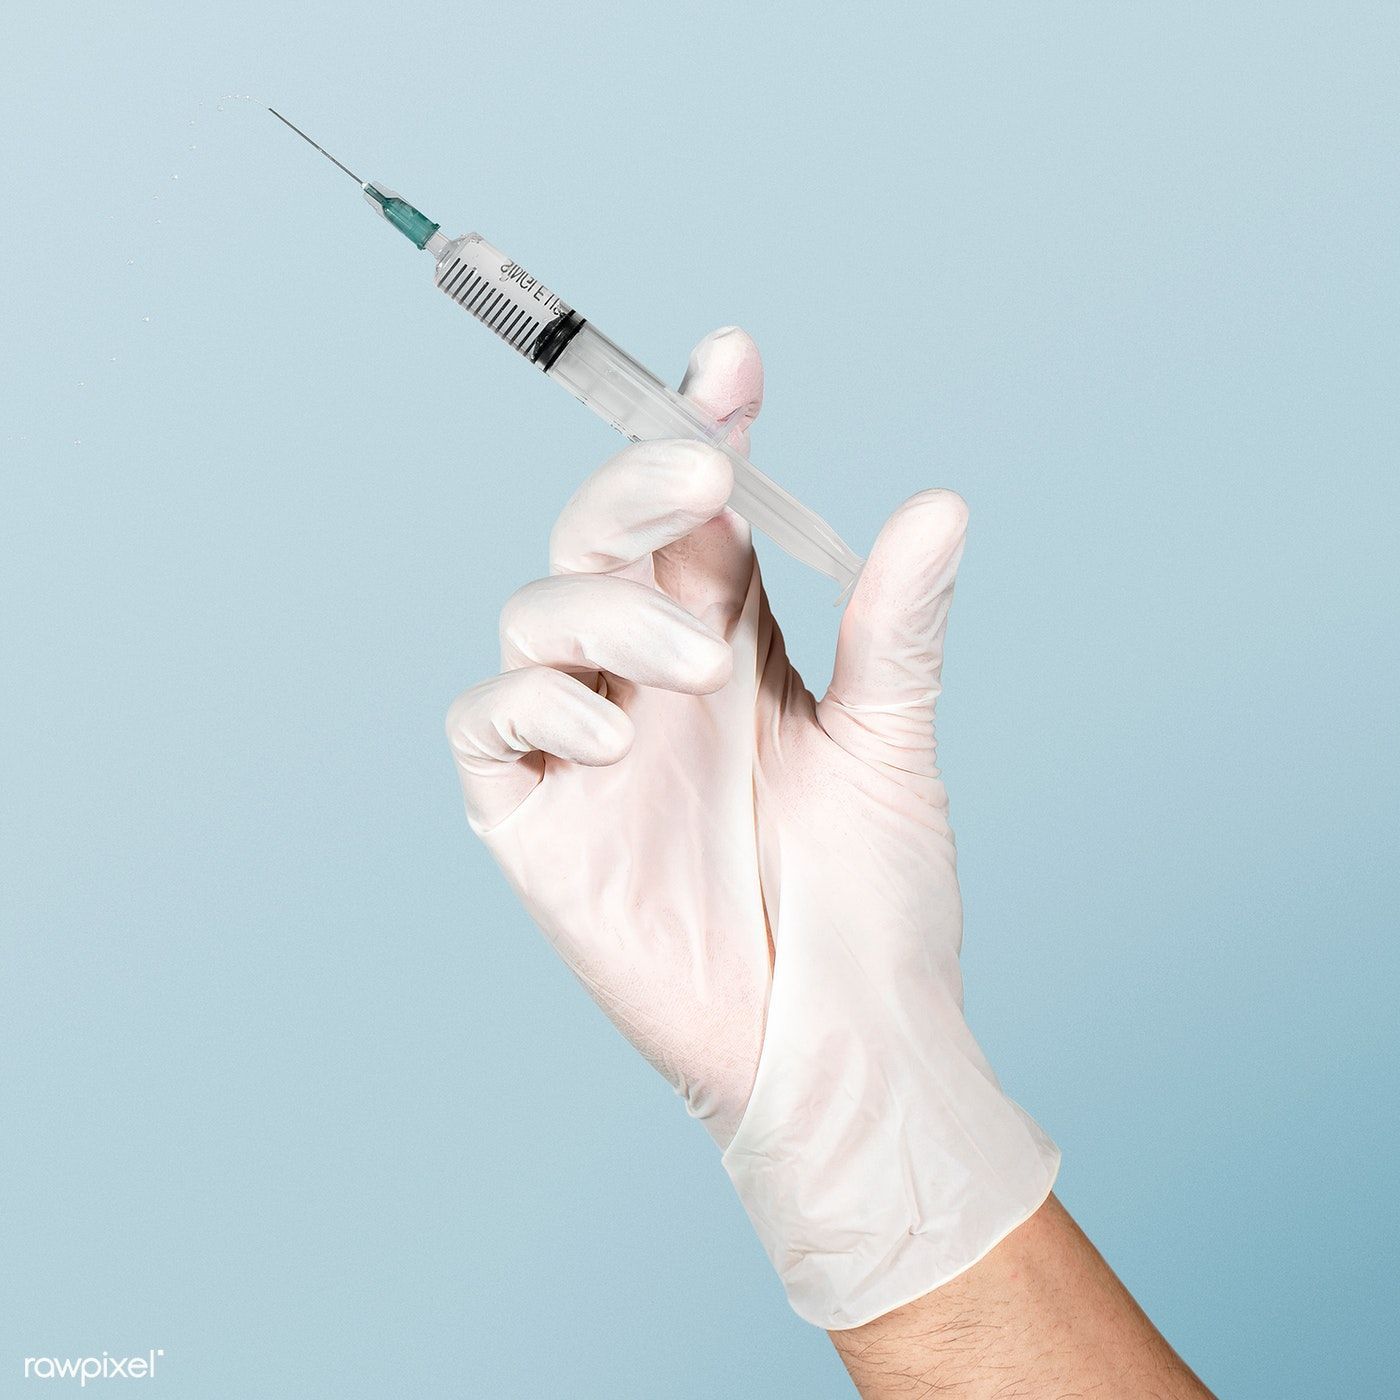 Download premium image of Hand wearing a white glove holding a syringe. Syringe, Hand image, Medical wallpaper